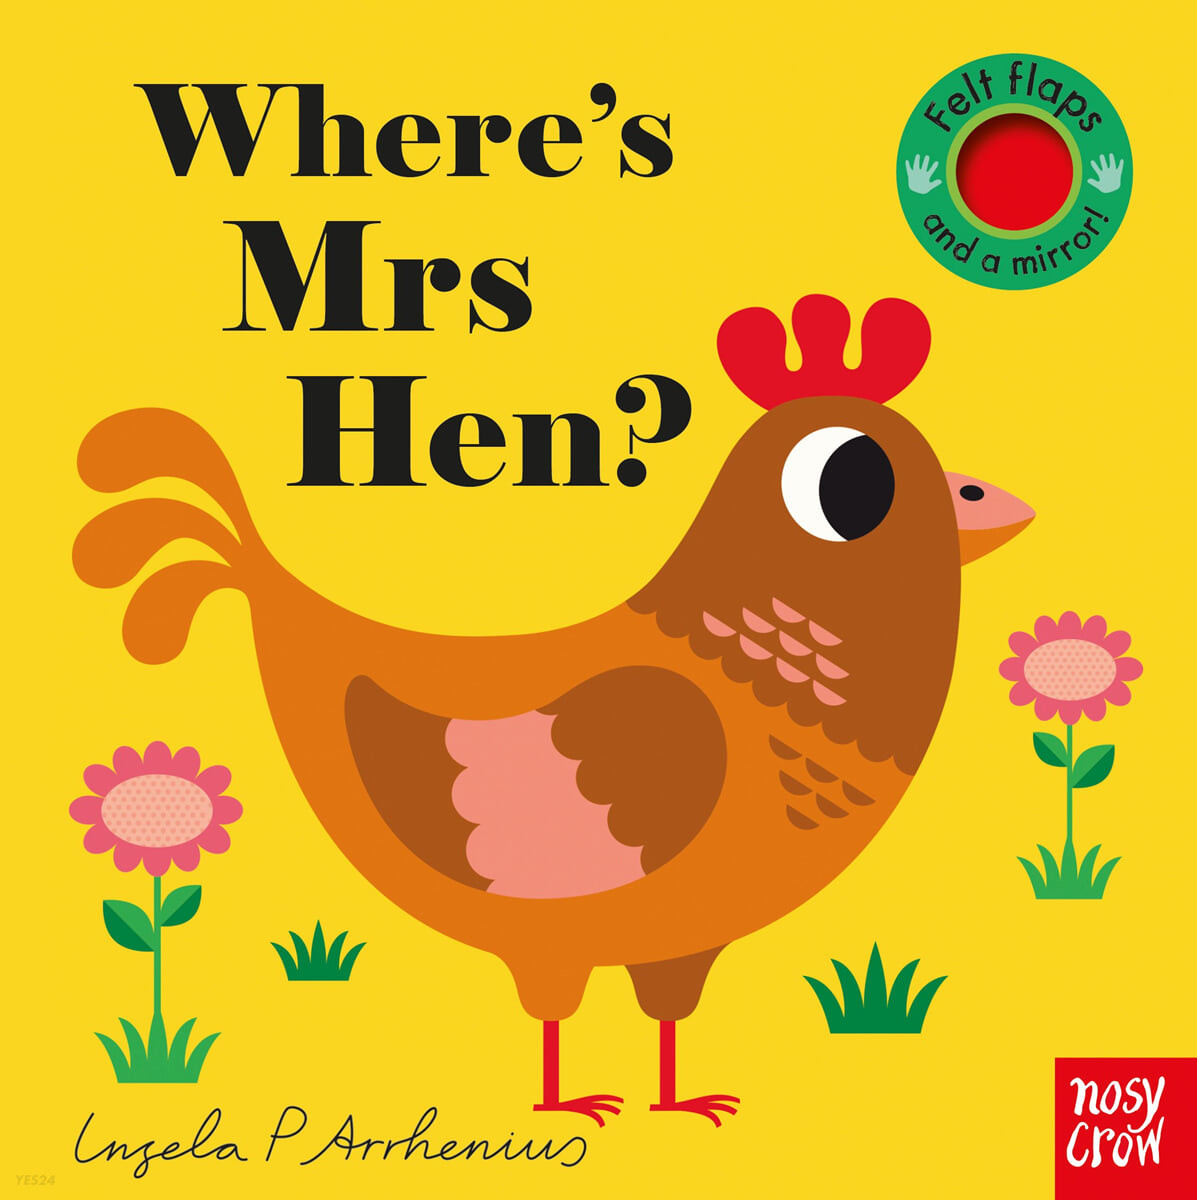 Wheres Mrs Hen?